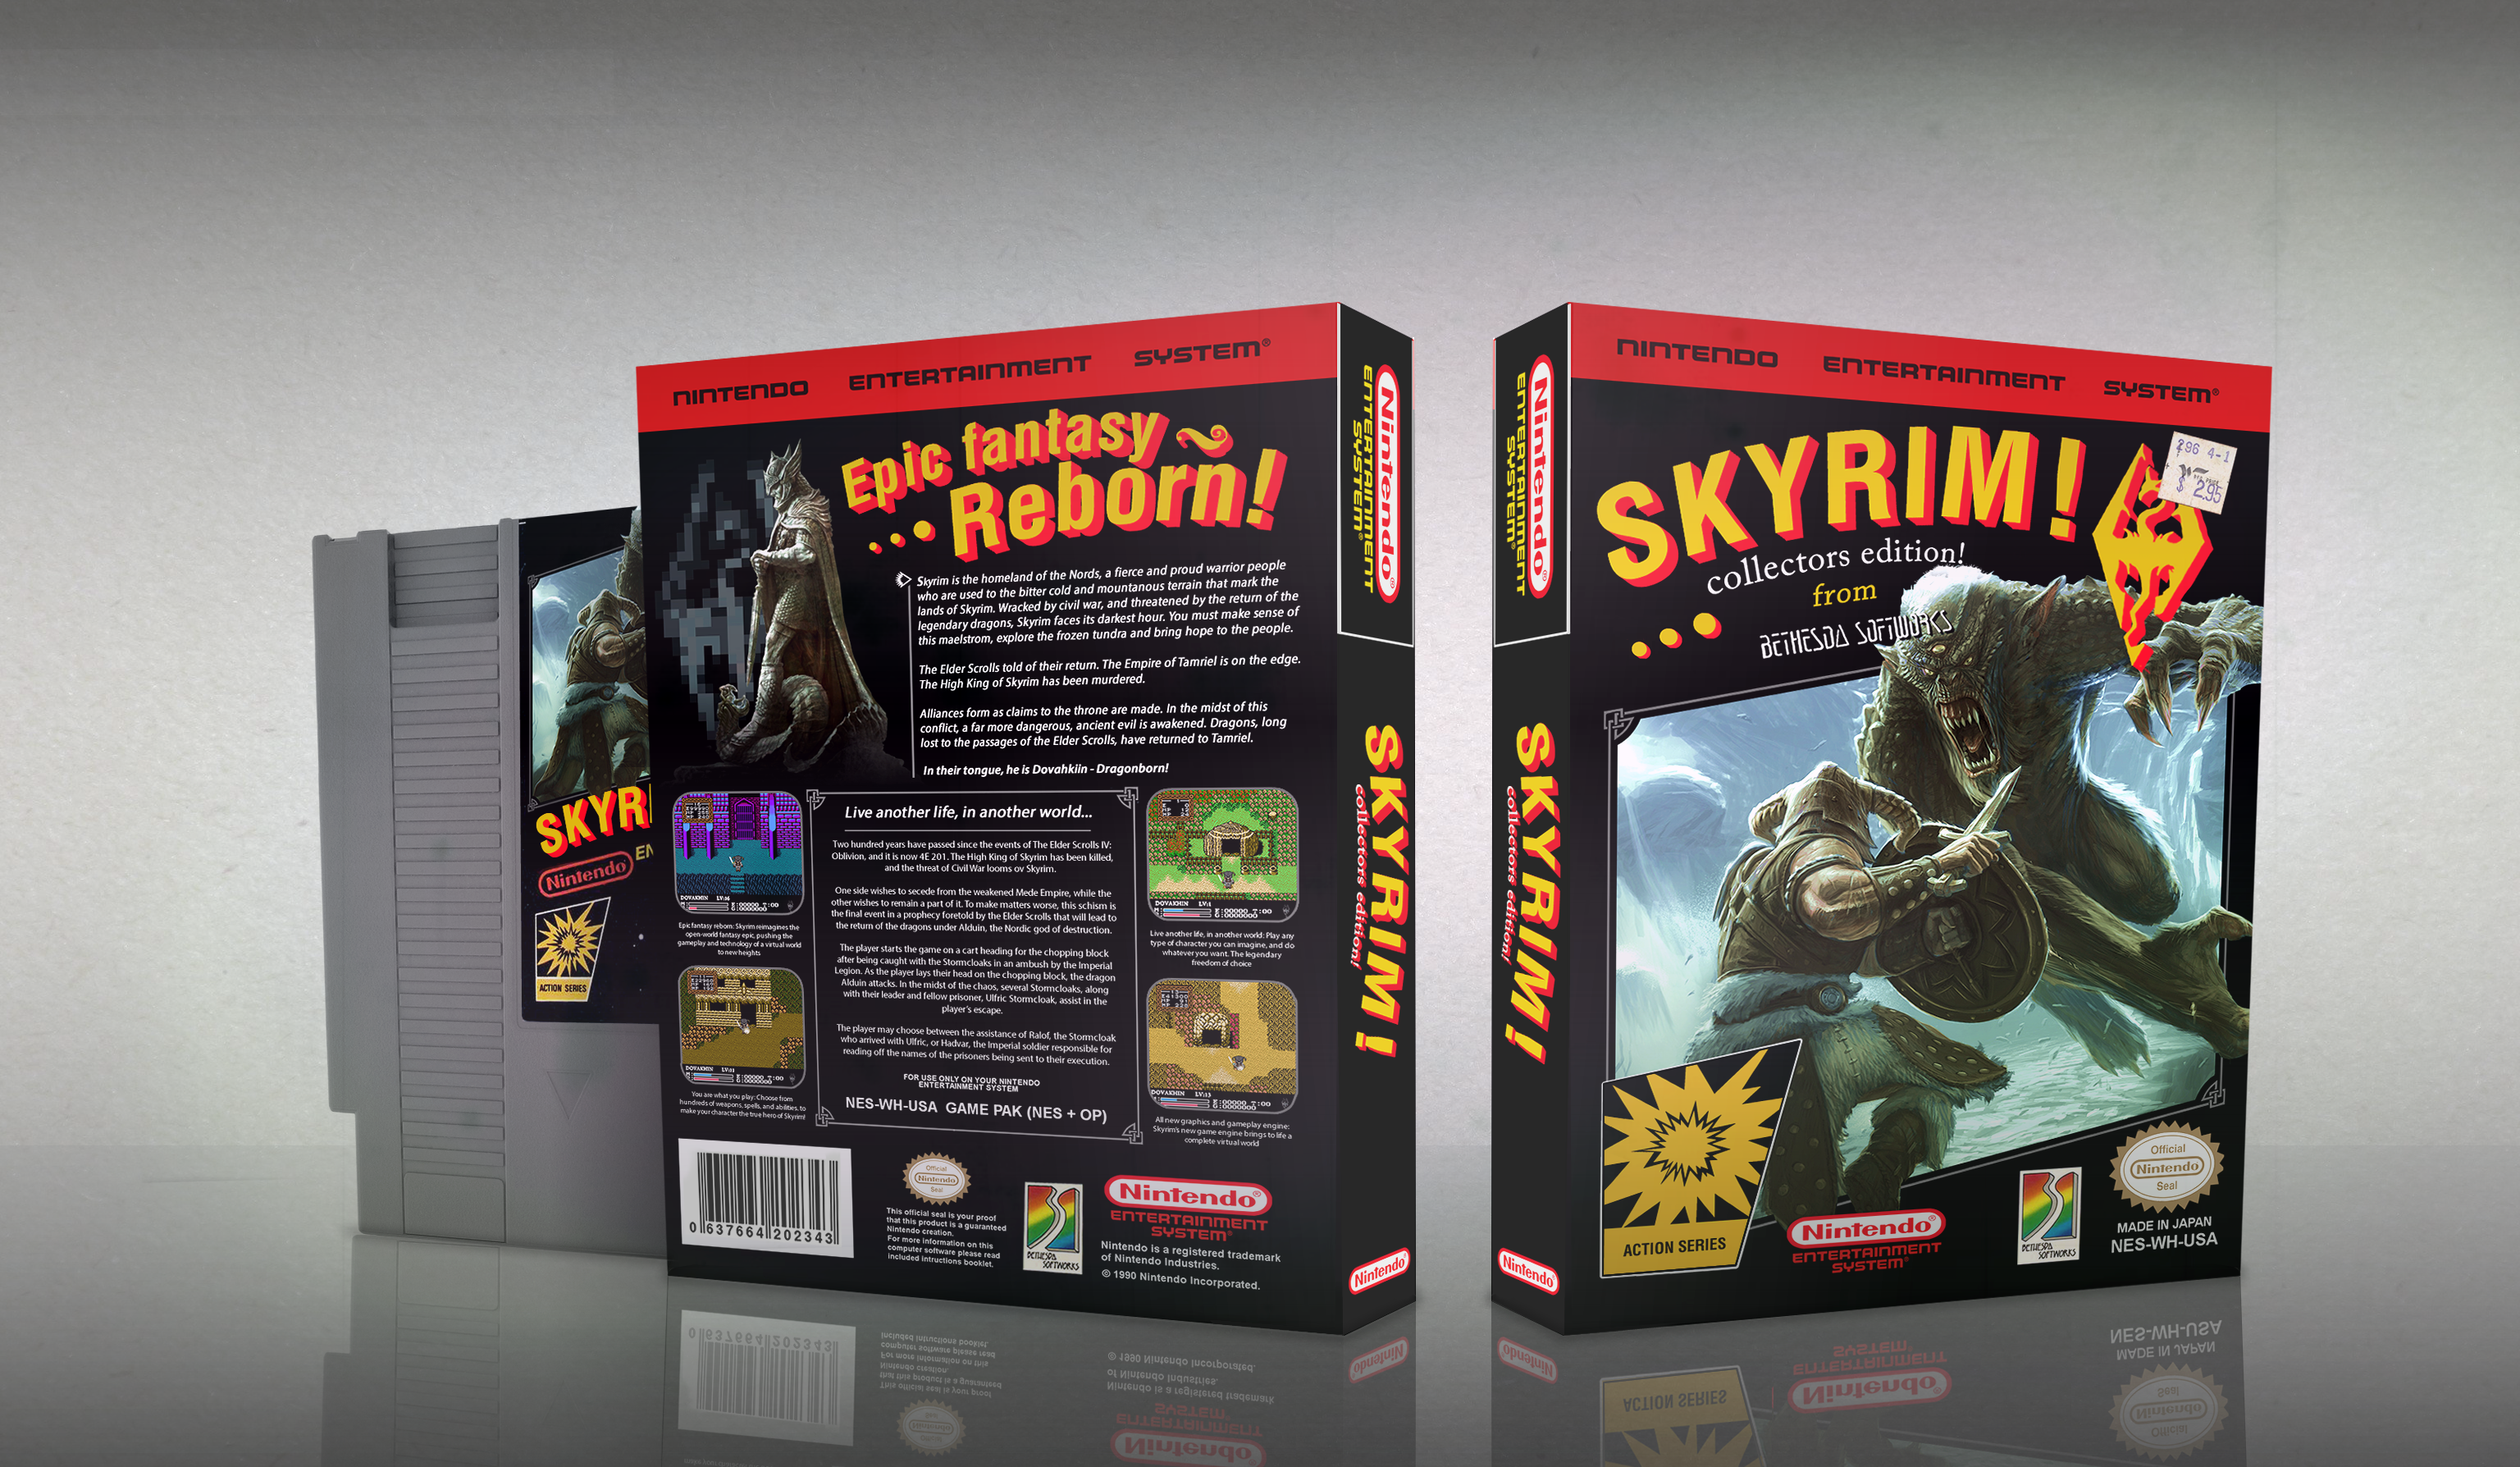 The Elder Scrolls V: Skyrim box cover